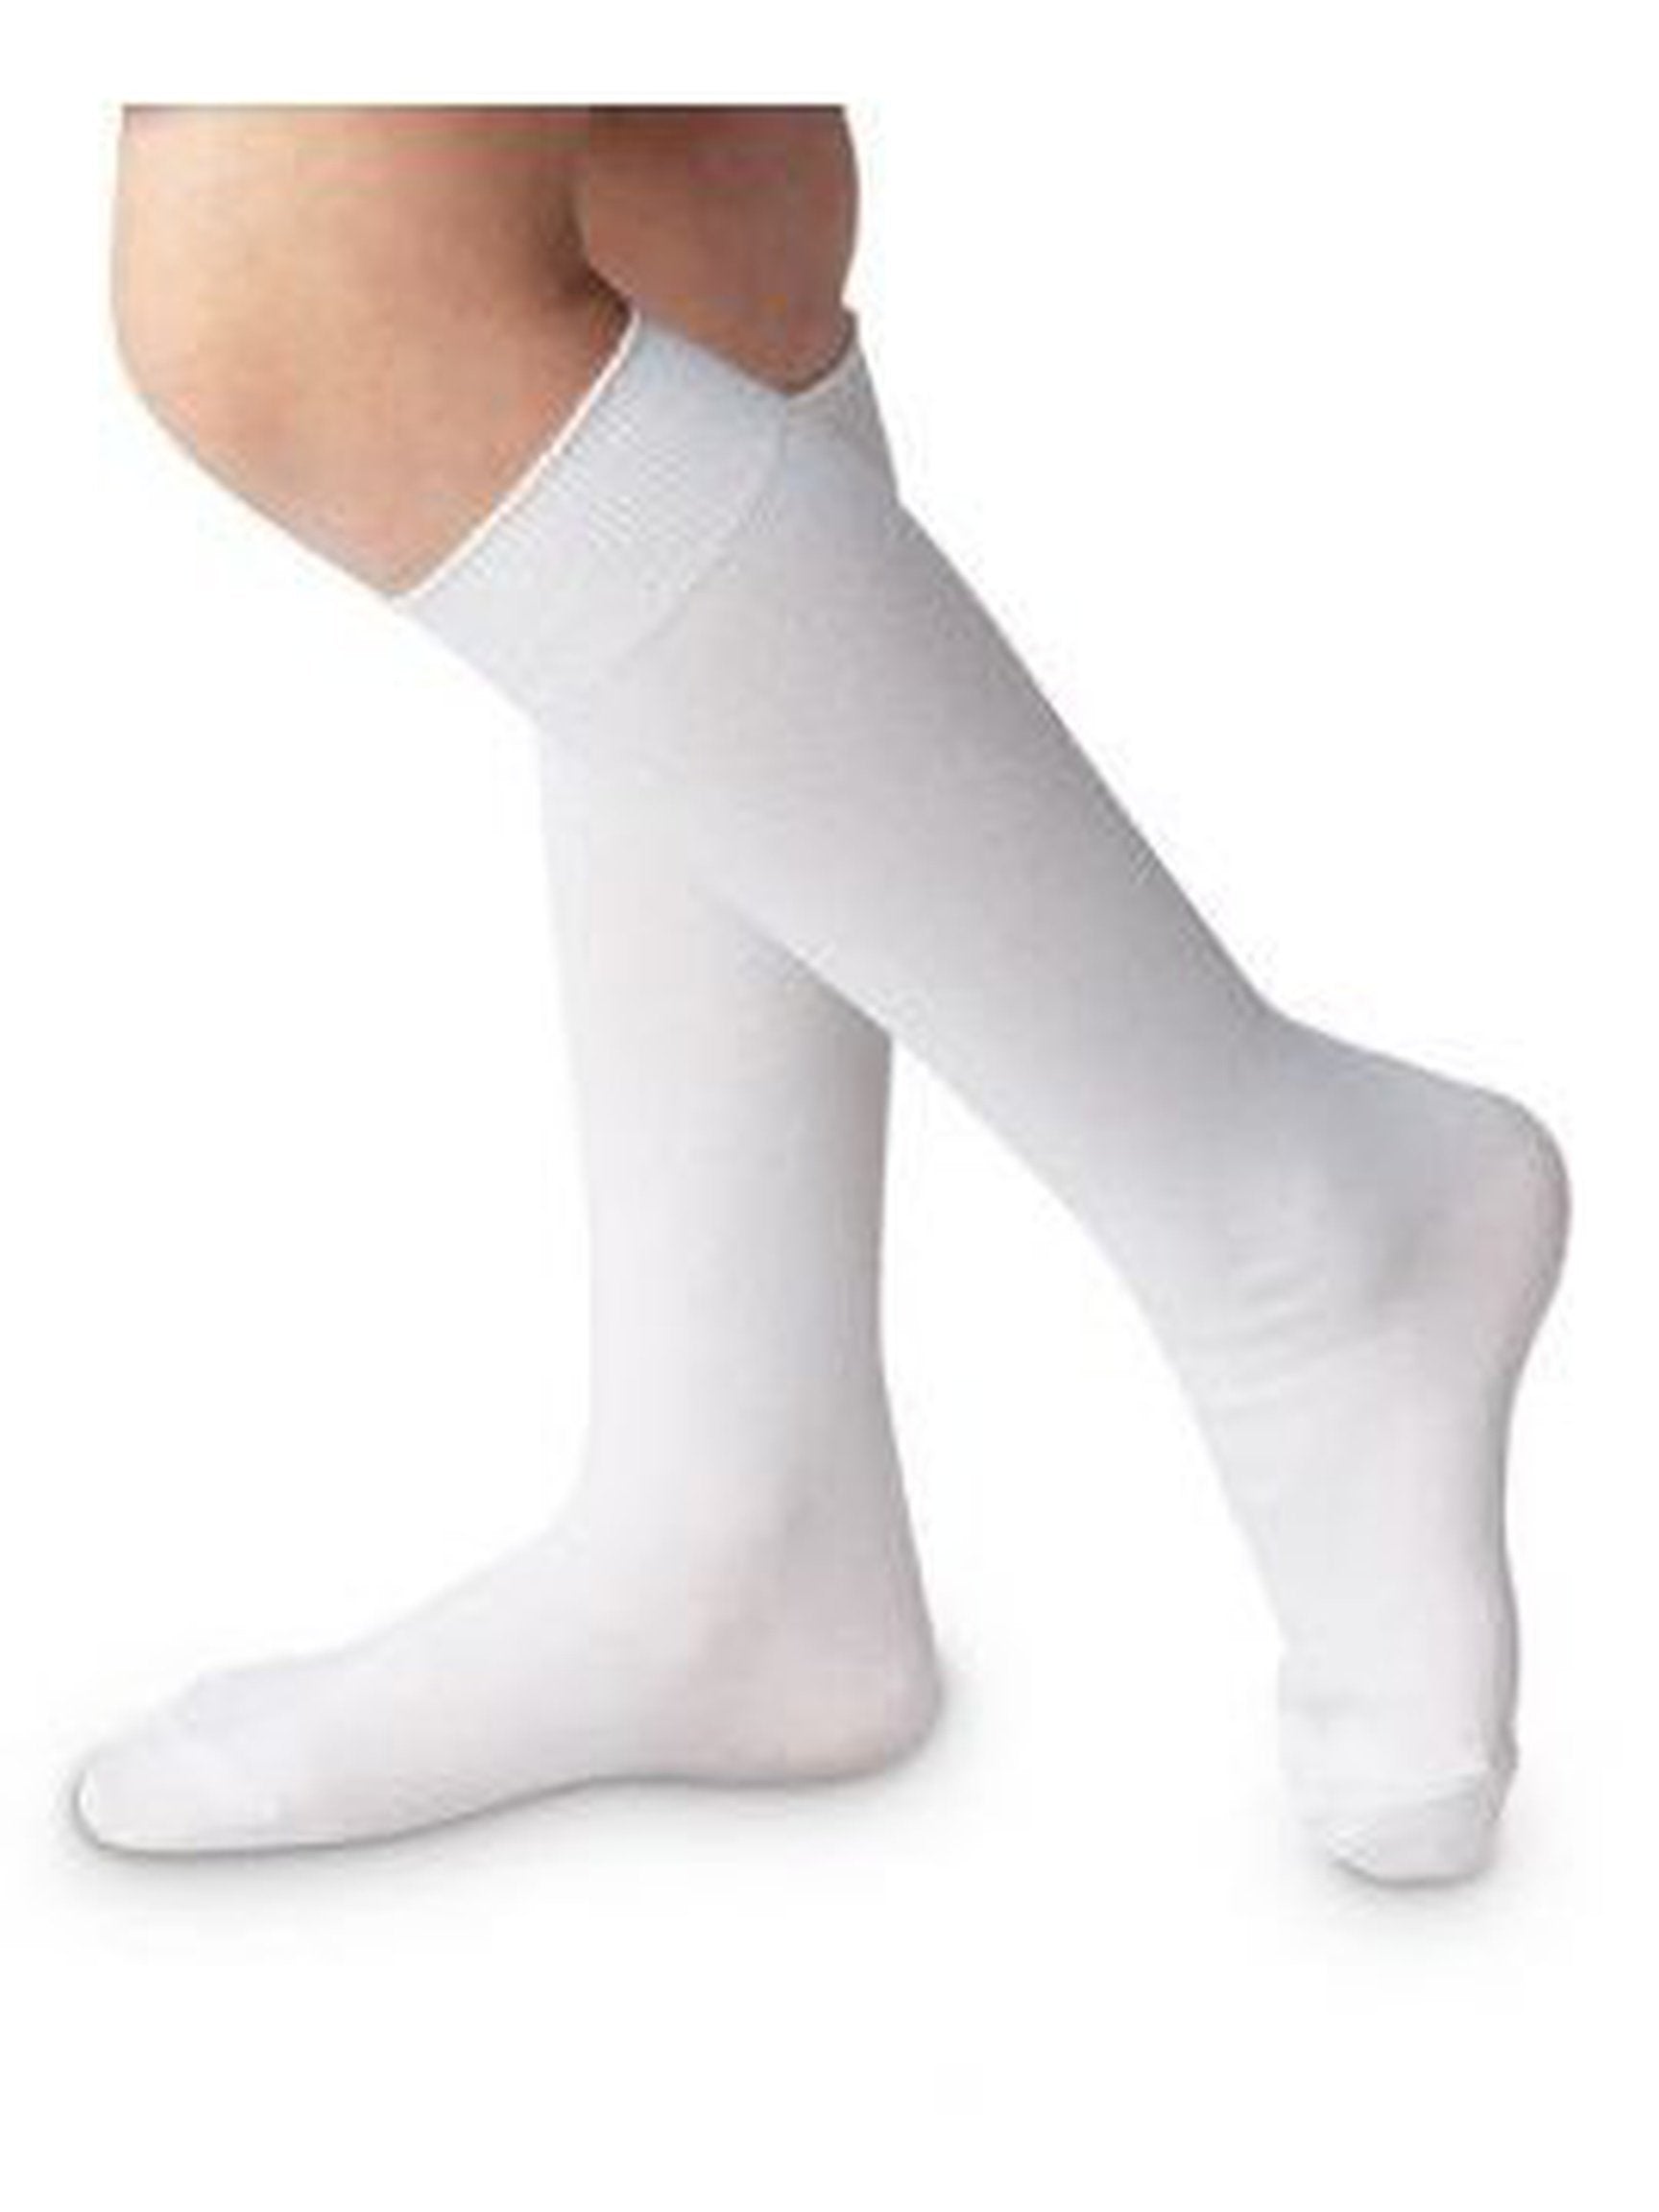 Nylon Knee High Socks, Unisex  Posh Tots Children's Boutique